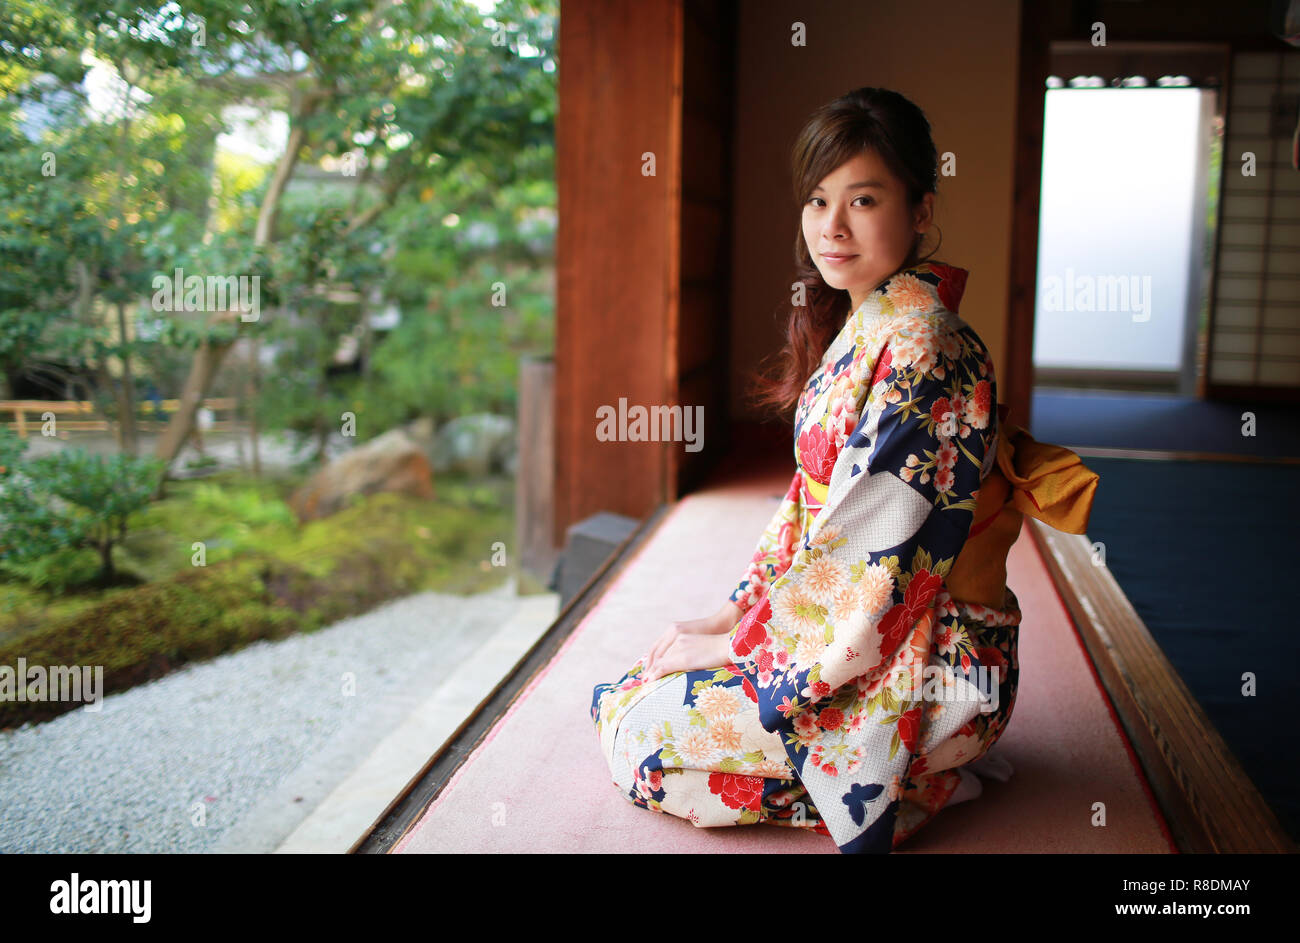 kimono dressing sit in front of the kyoto garden Stock Photo